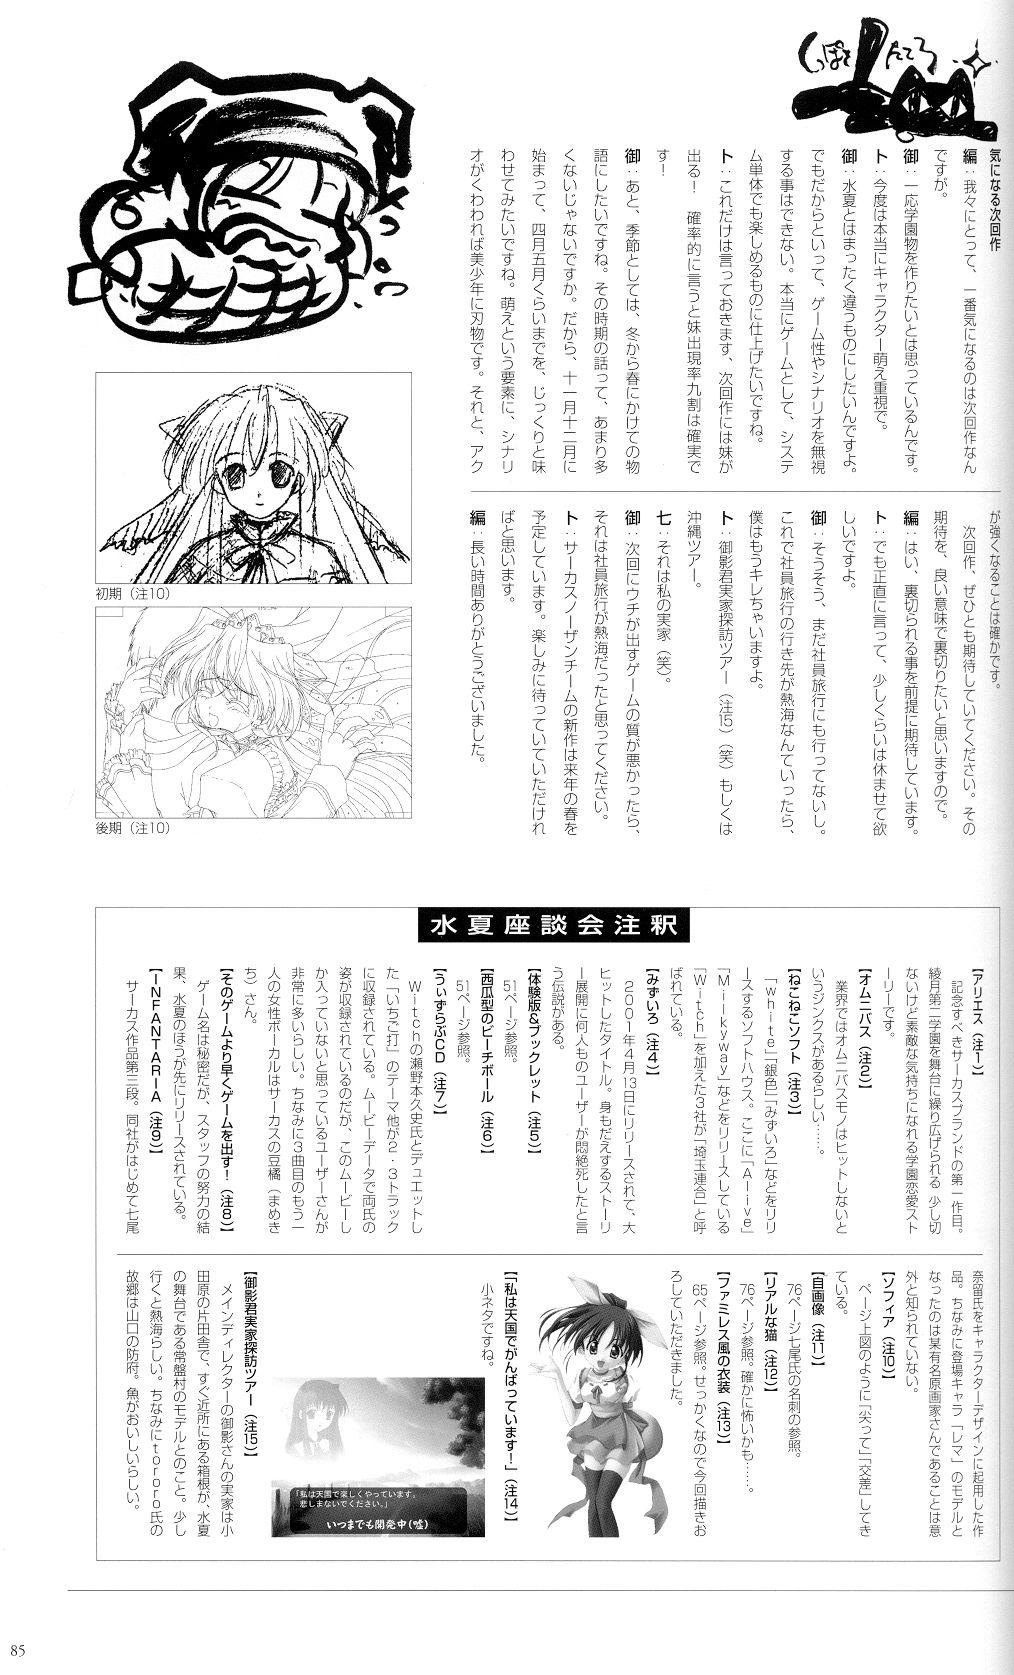 SUIKA Official Visual Fan Book 93